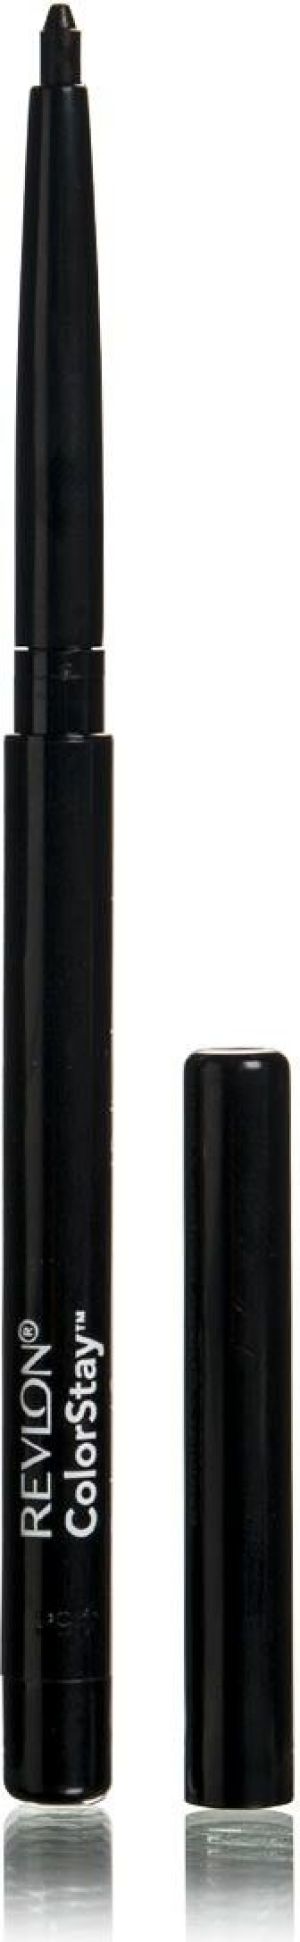 Revlon ColorStay Eyeliner wodoodporna konturówka do oczu 01 Black 0,28g 1